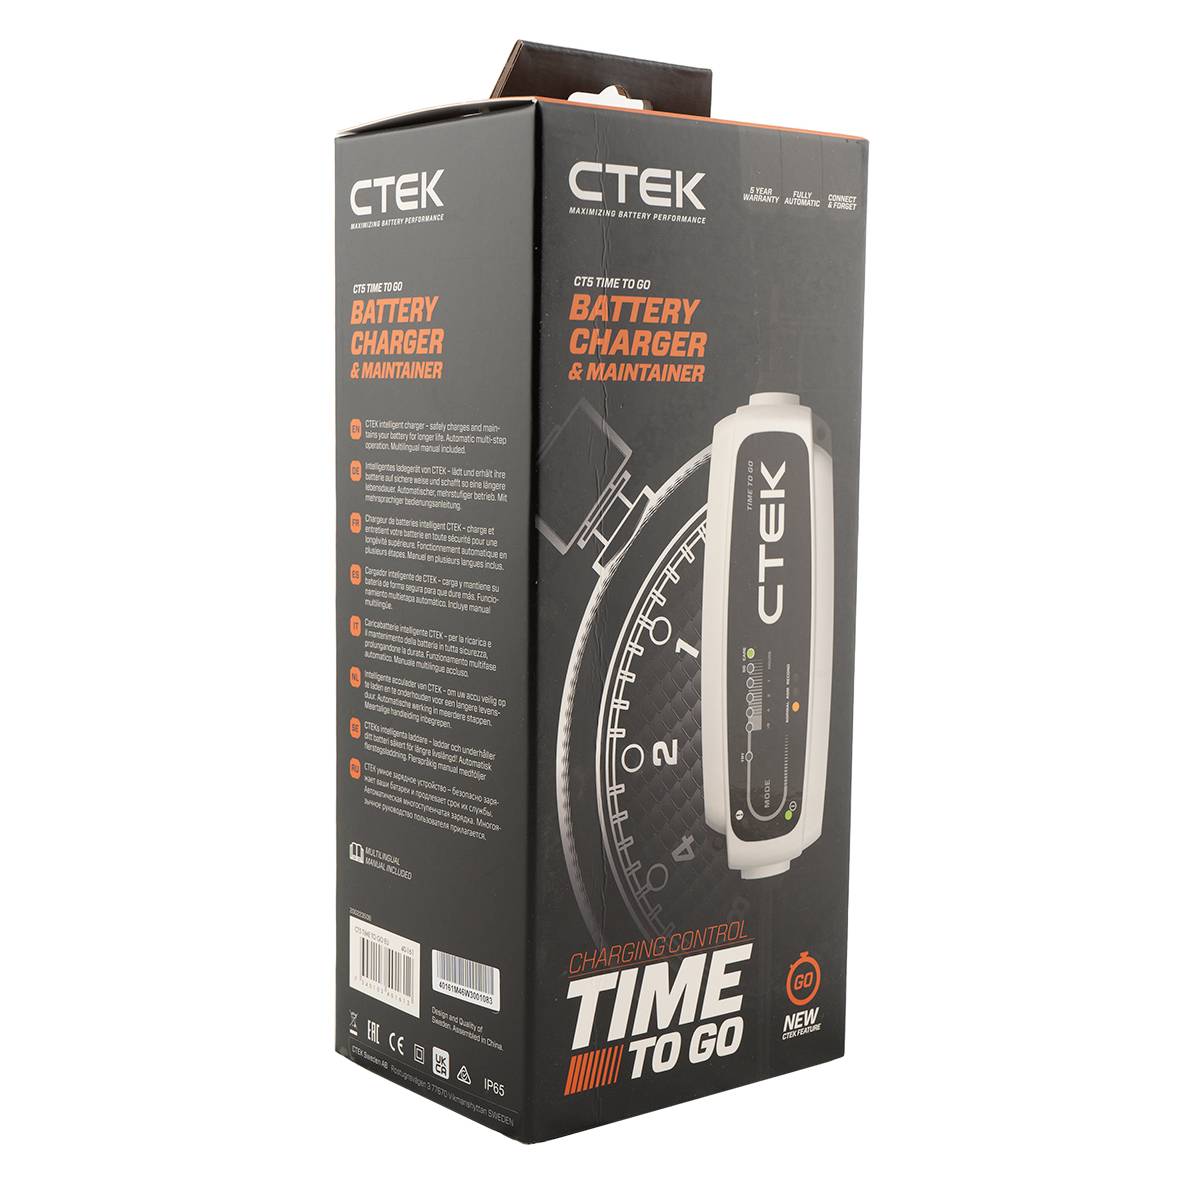 CTEK CT5 TIME TO GO EU Batterie Ladegerät für12V AGM Batterien, Ladegeräte, Boot, Batterien für